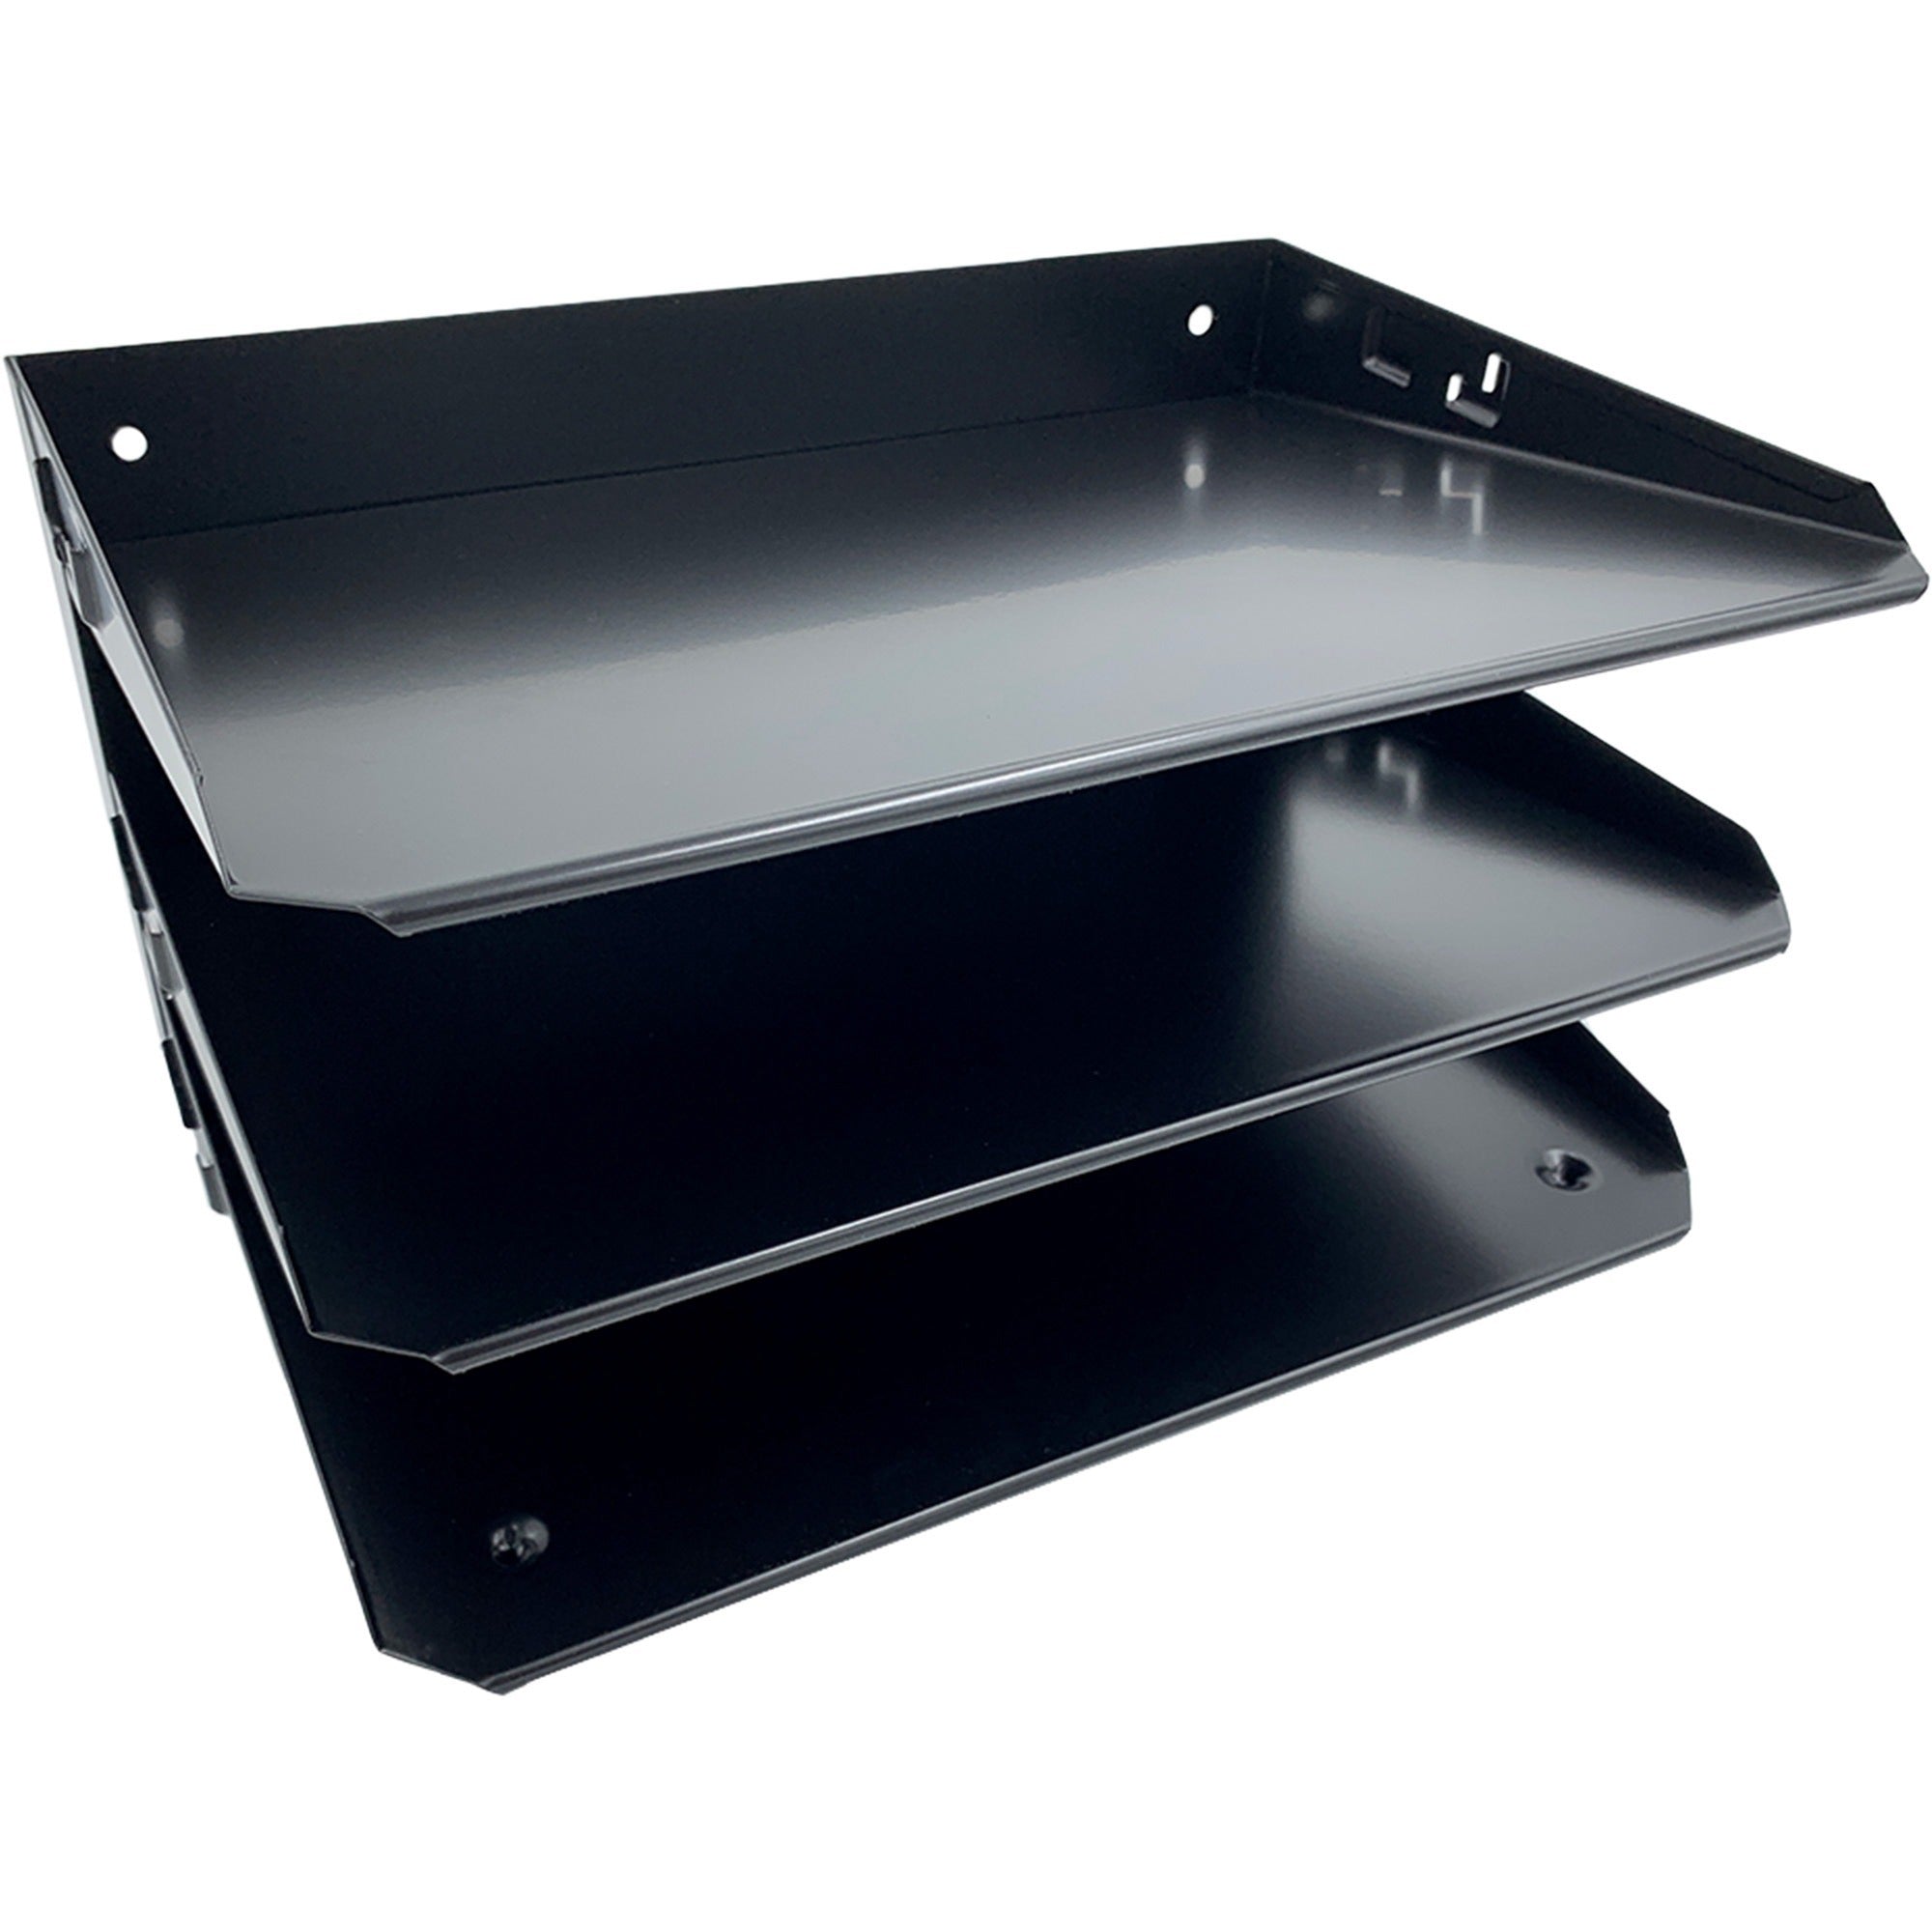 huron-horizontal-slots-desk-organizer-6-compartments-horizontal-6-height-x-12-width-x-88-depth-durable-black-steel-1-each_hurhasz0159 - 1